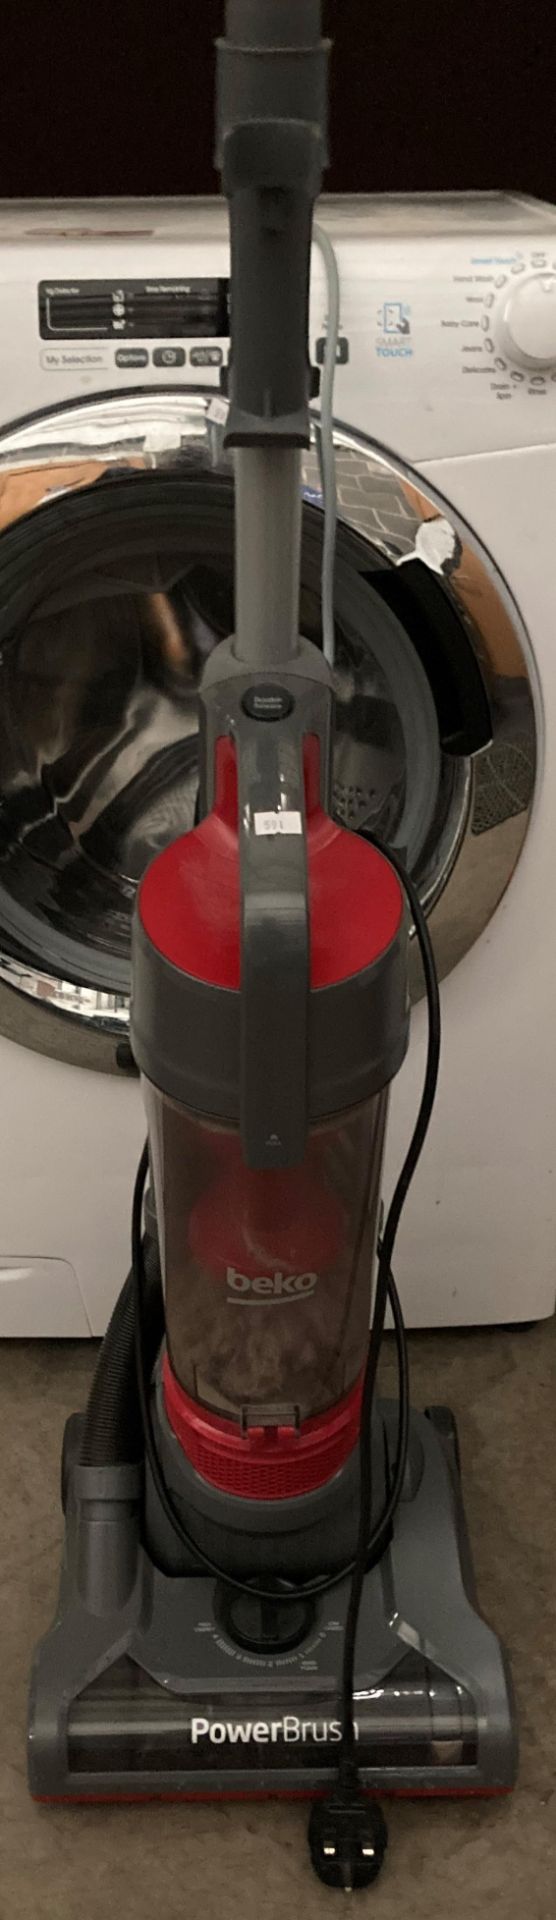 A Bek0 Powerbrush upright vacuum cleaner